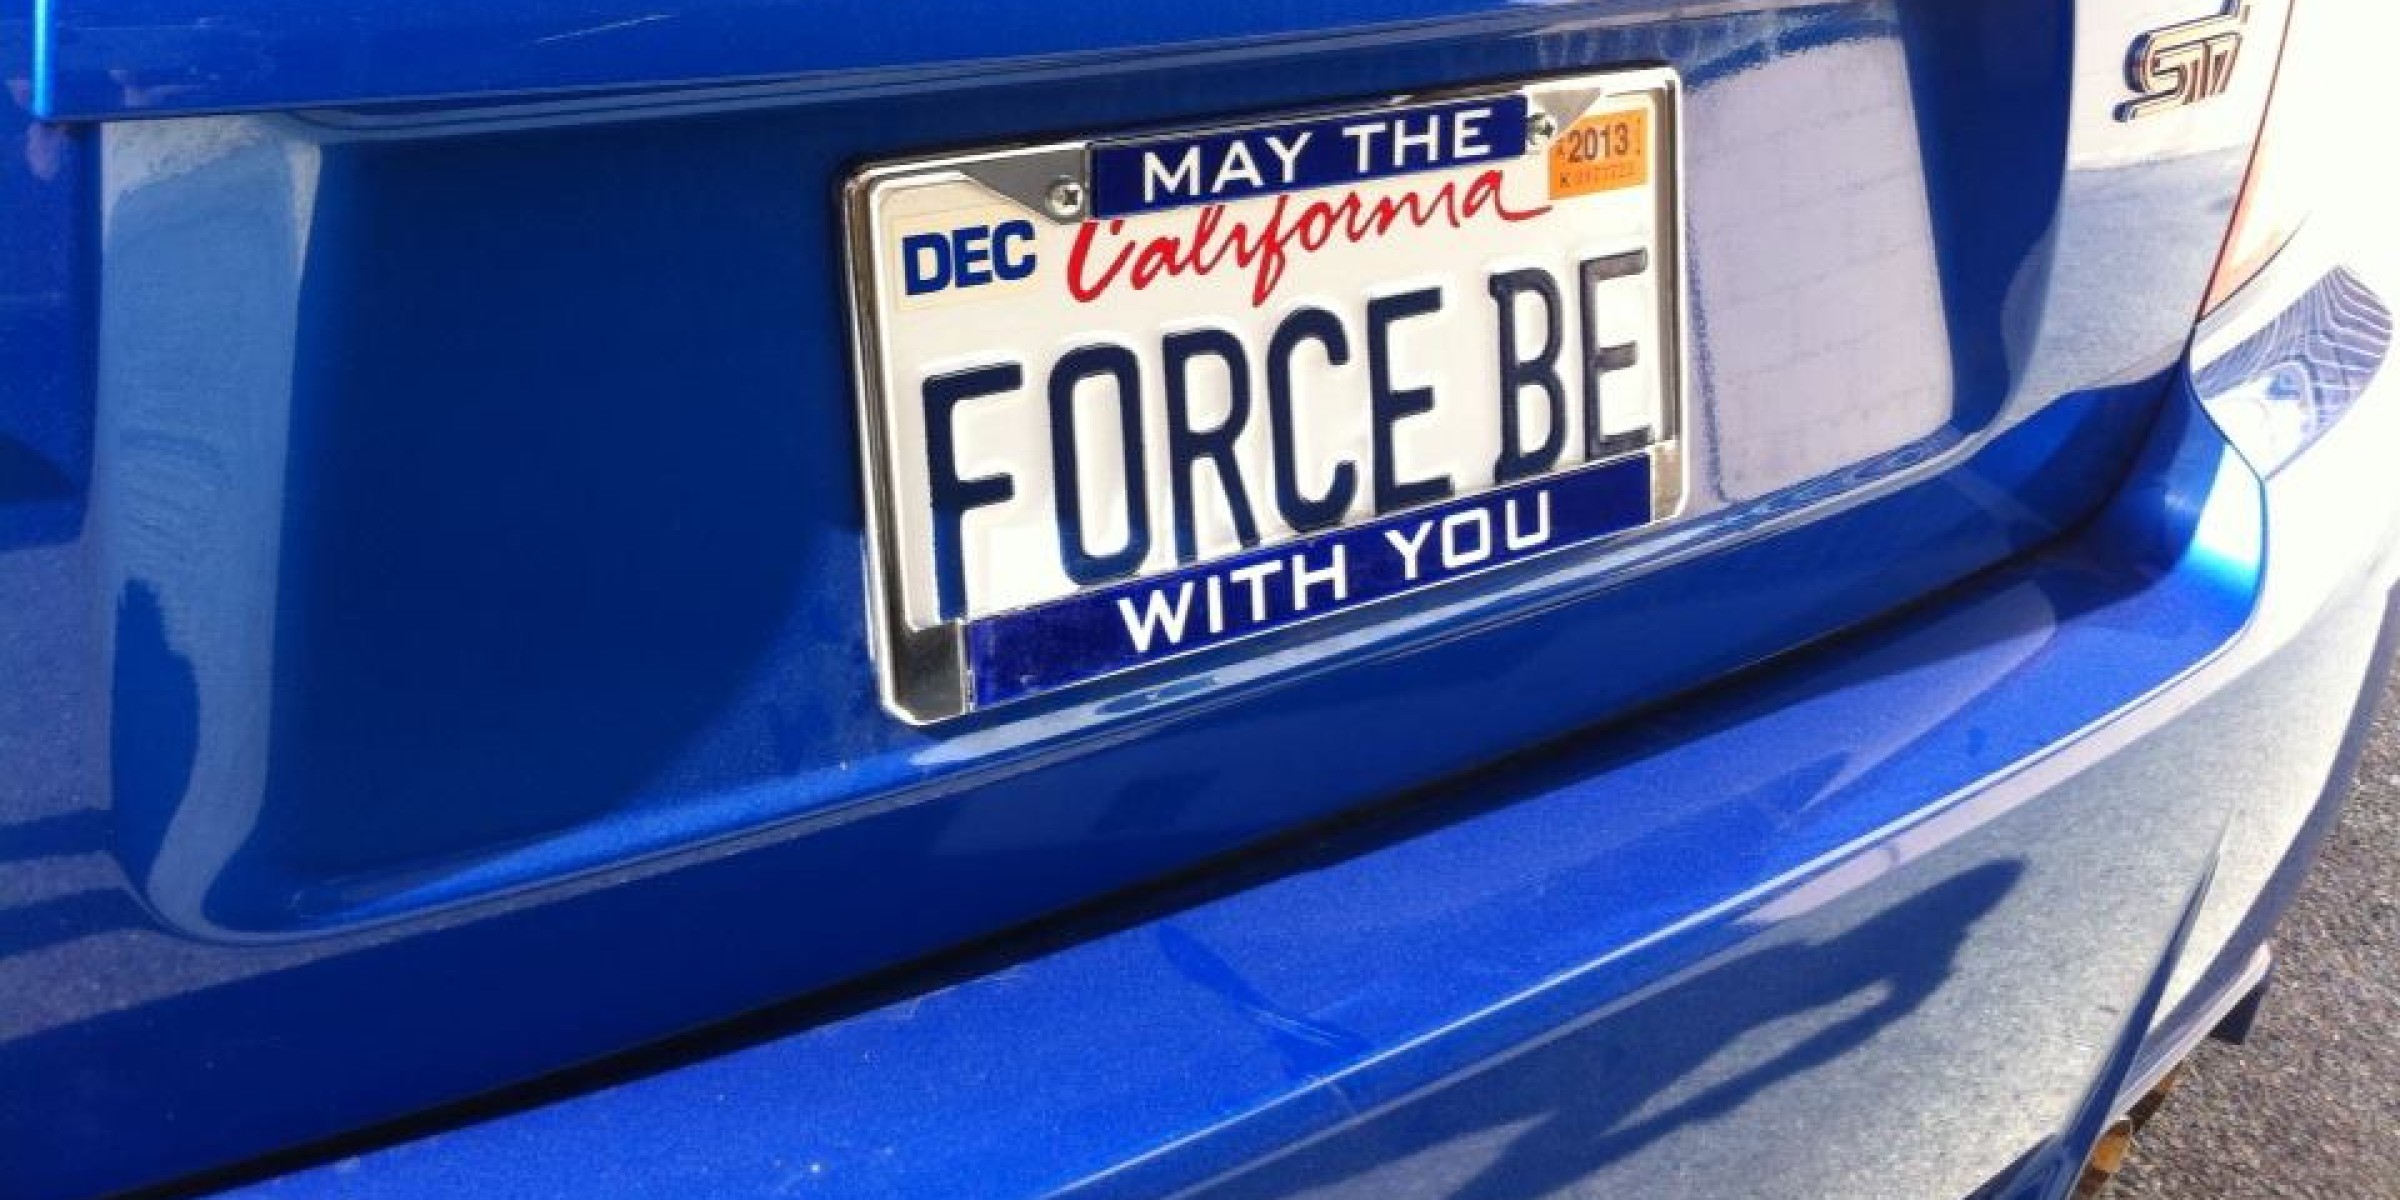 Star Wars Custom Plate